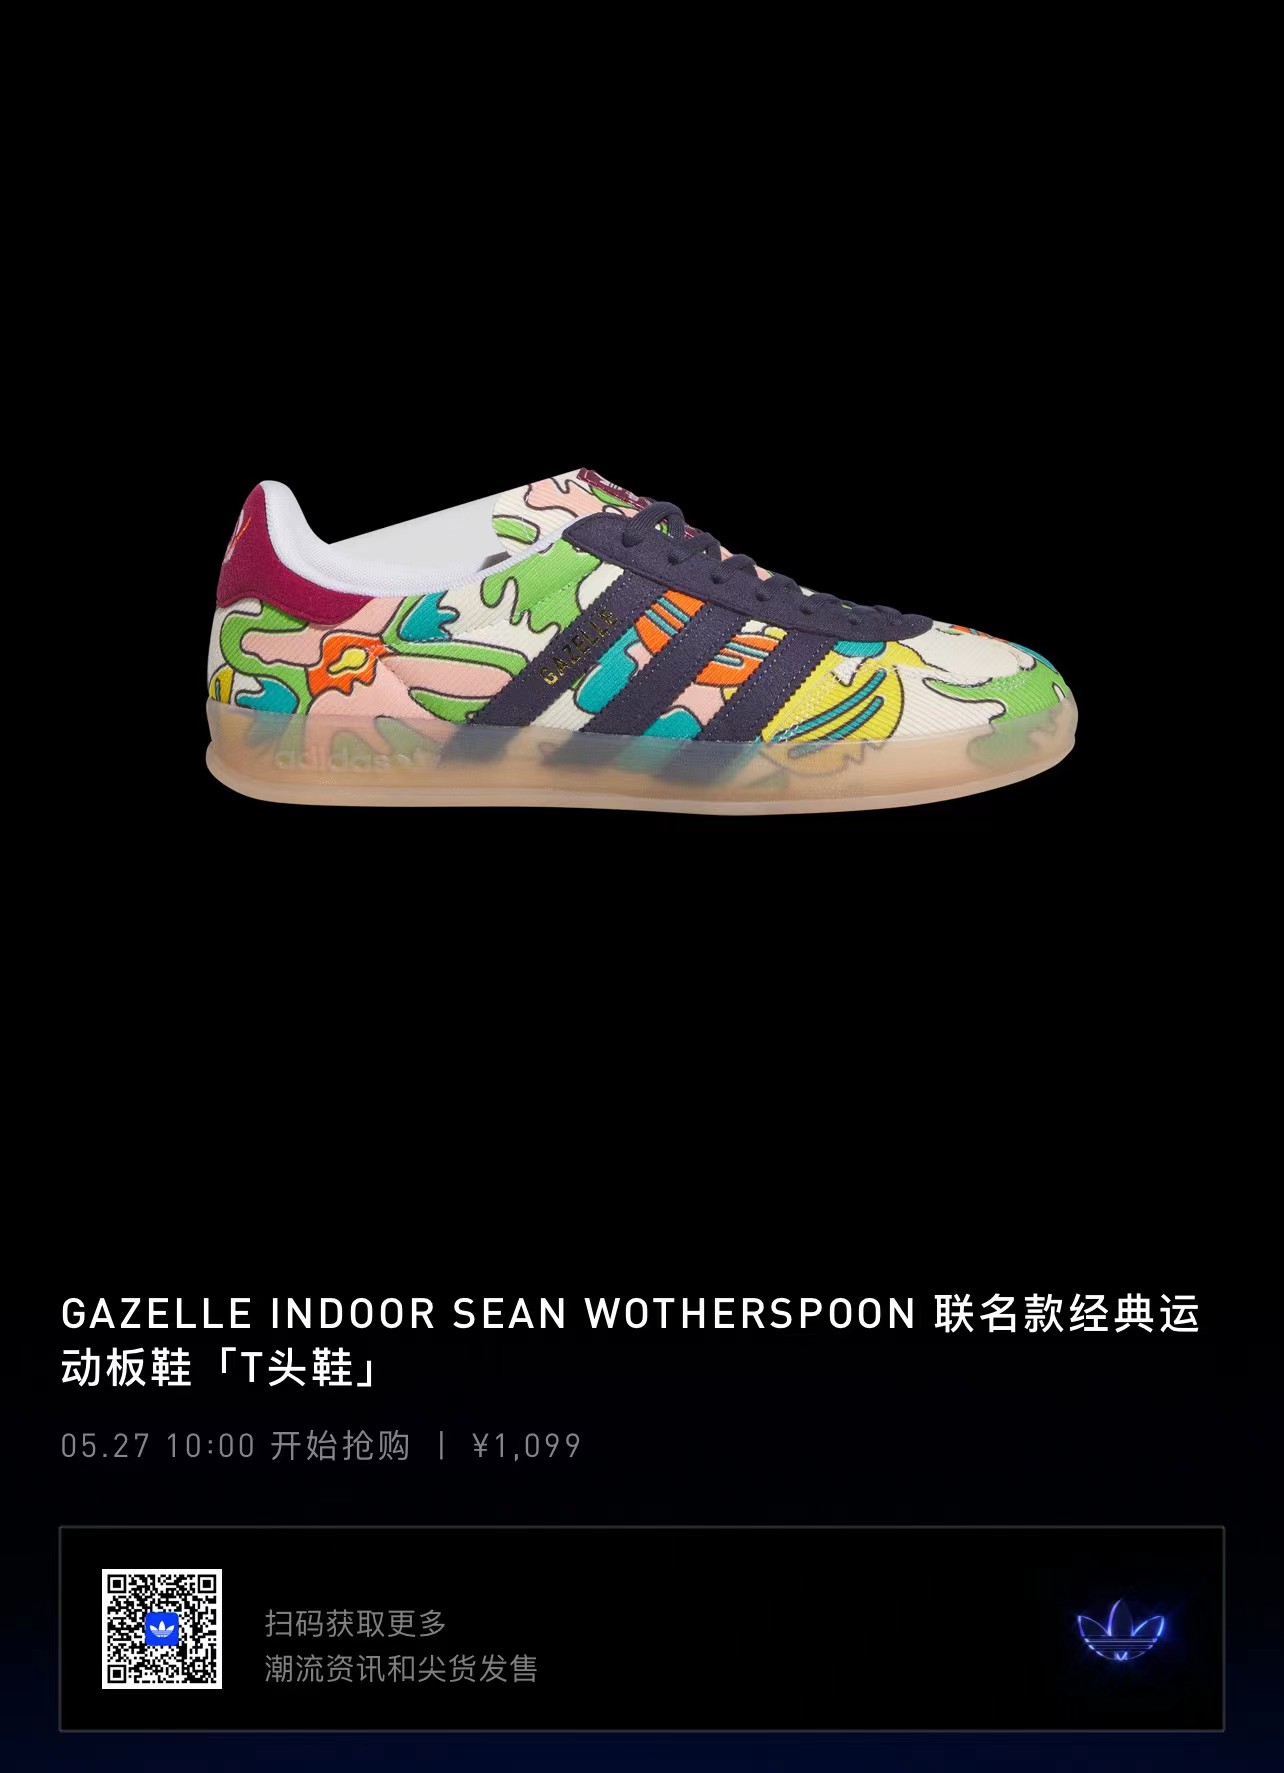 Sean Wotherspoon,adidas Origin  「灯芯绒大帝」新鞋换质感了！这配色敢买不敢穿!